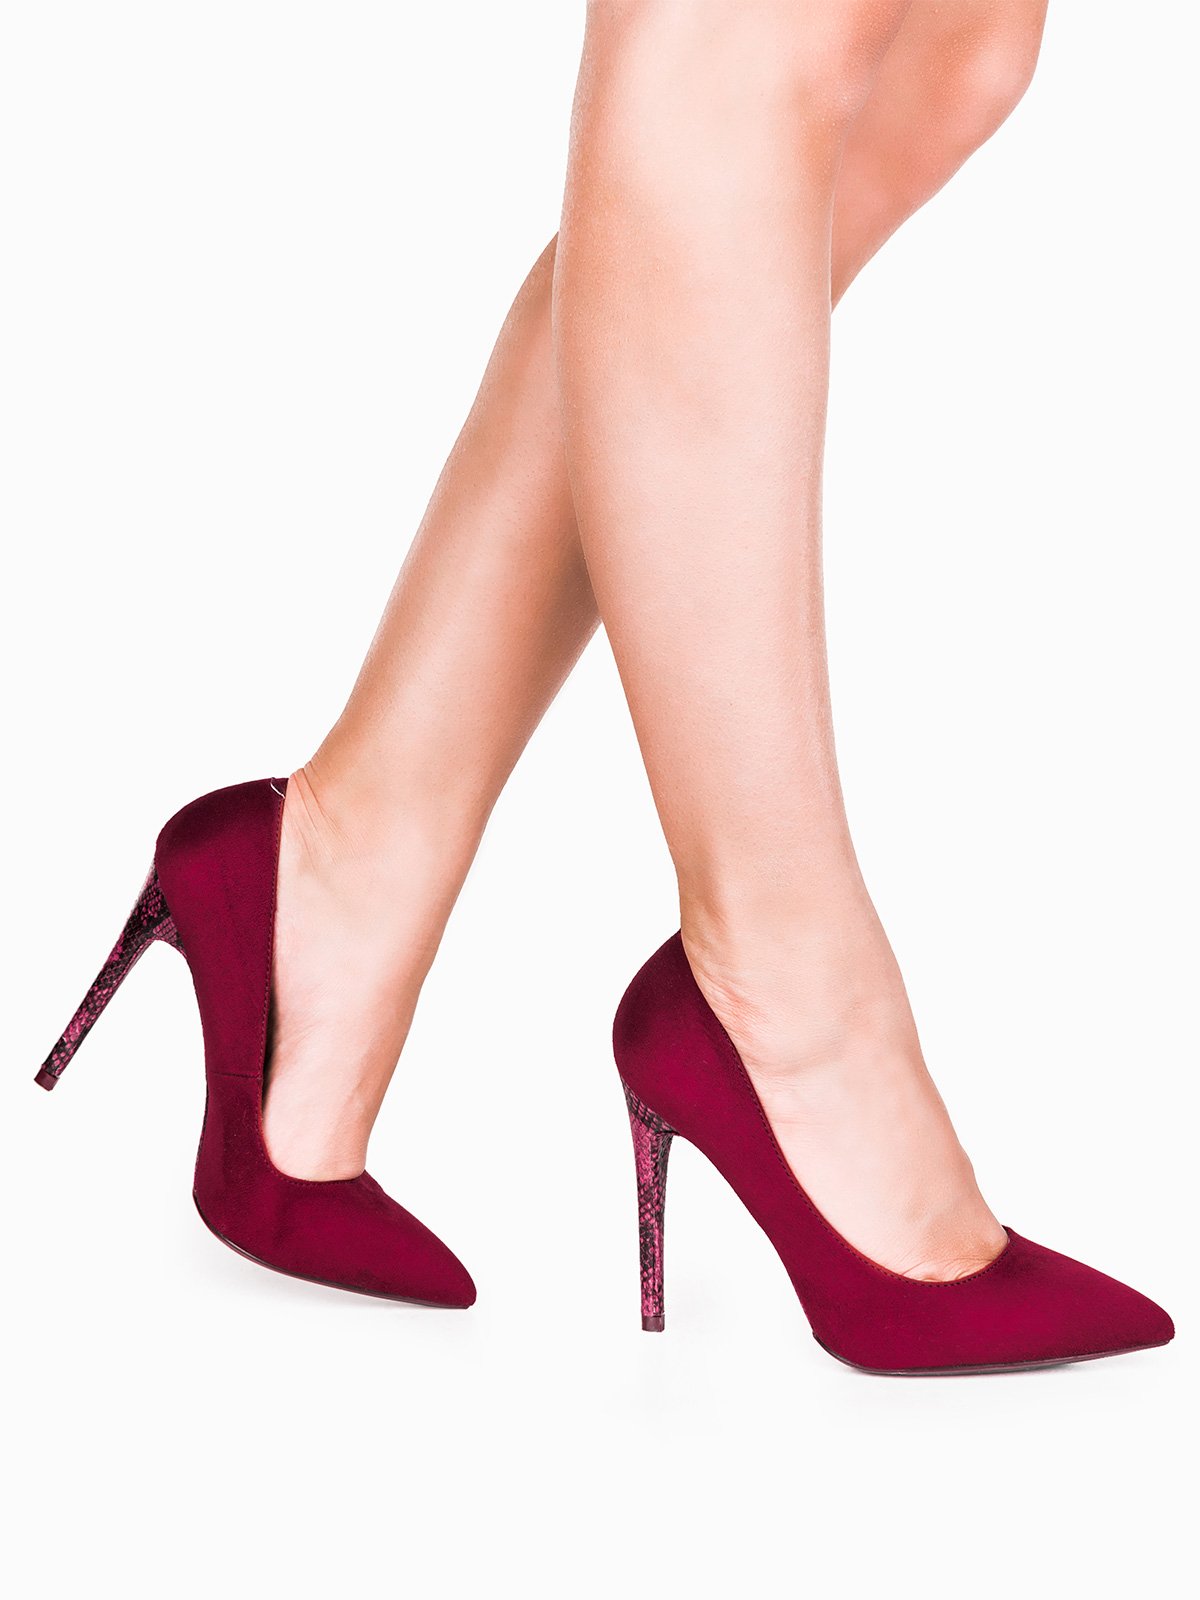 dark heels | MODONE wholesale - Clothing For